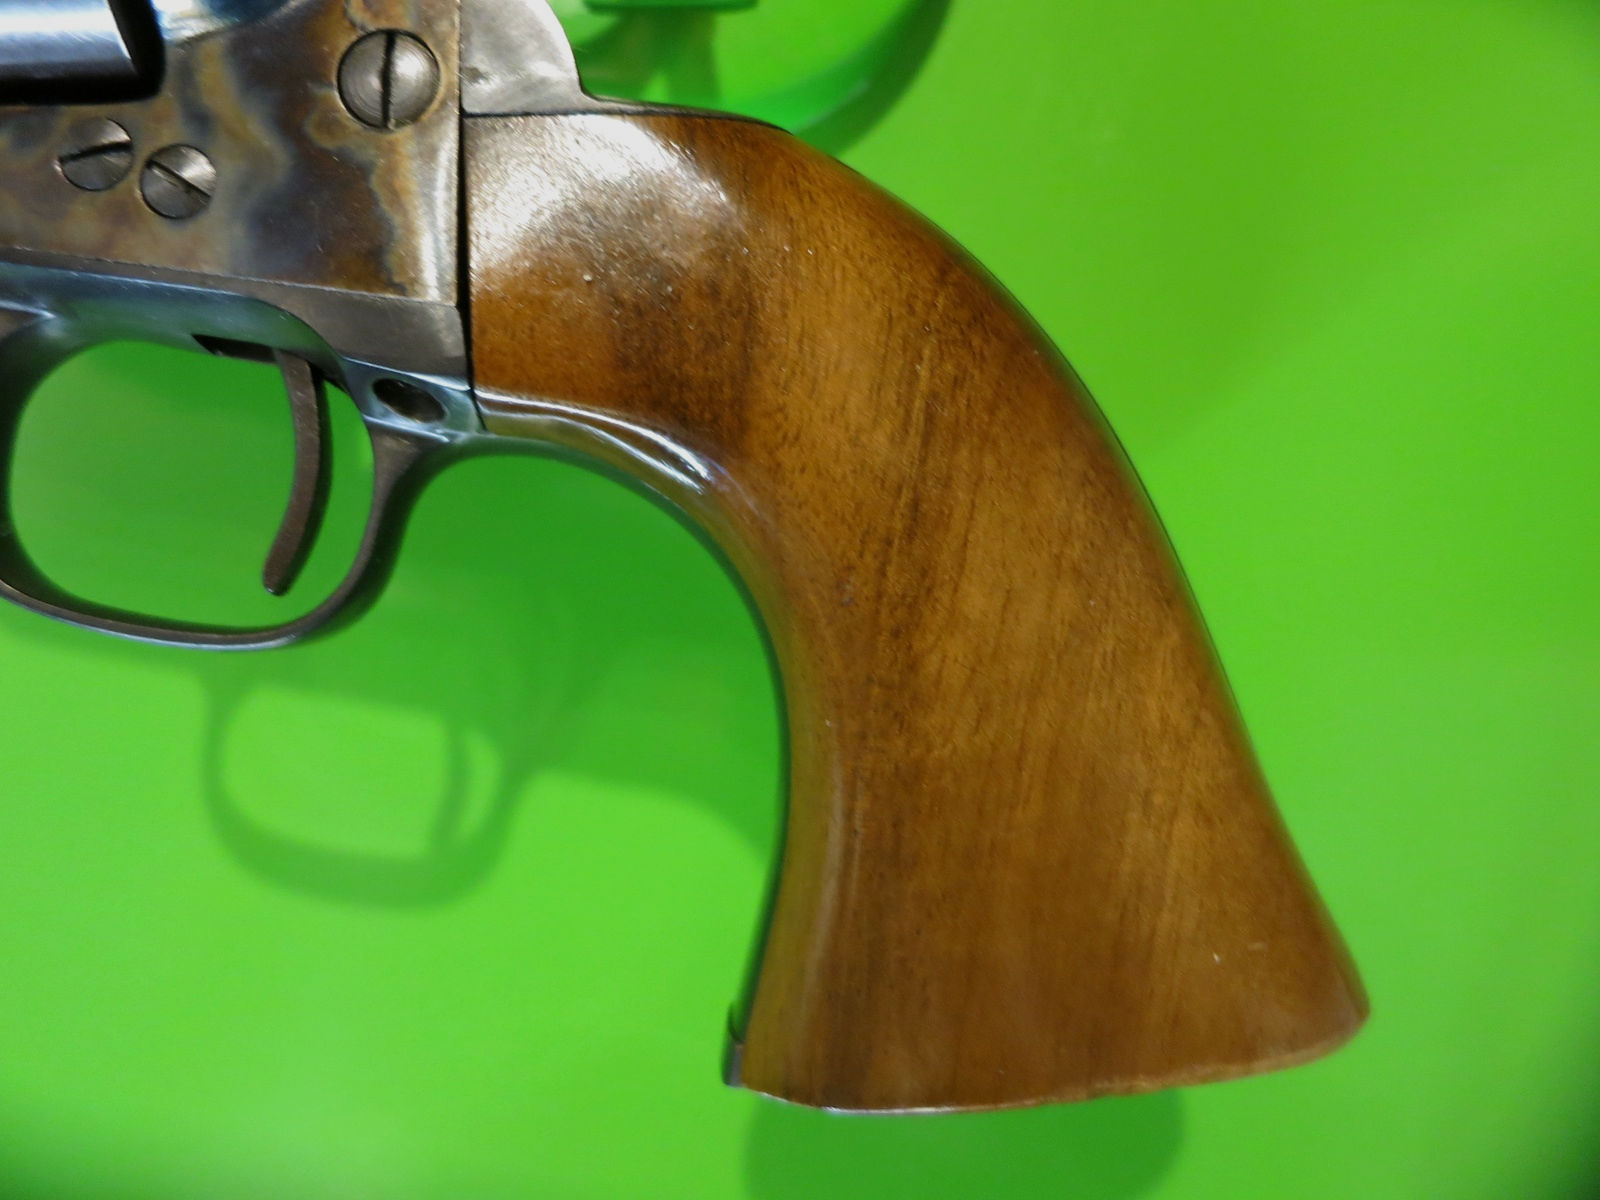 Western-Revolver, Armi Jäger (Dakota) Italy Frontier Buntline, Kaliber .45Colt, Replik: Colt M1873     #26